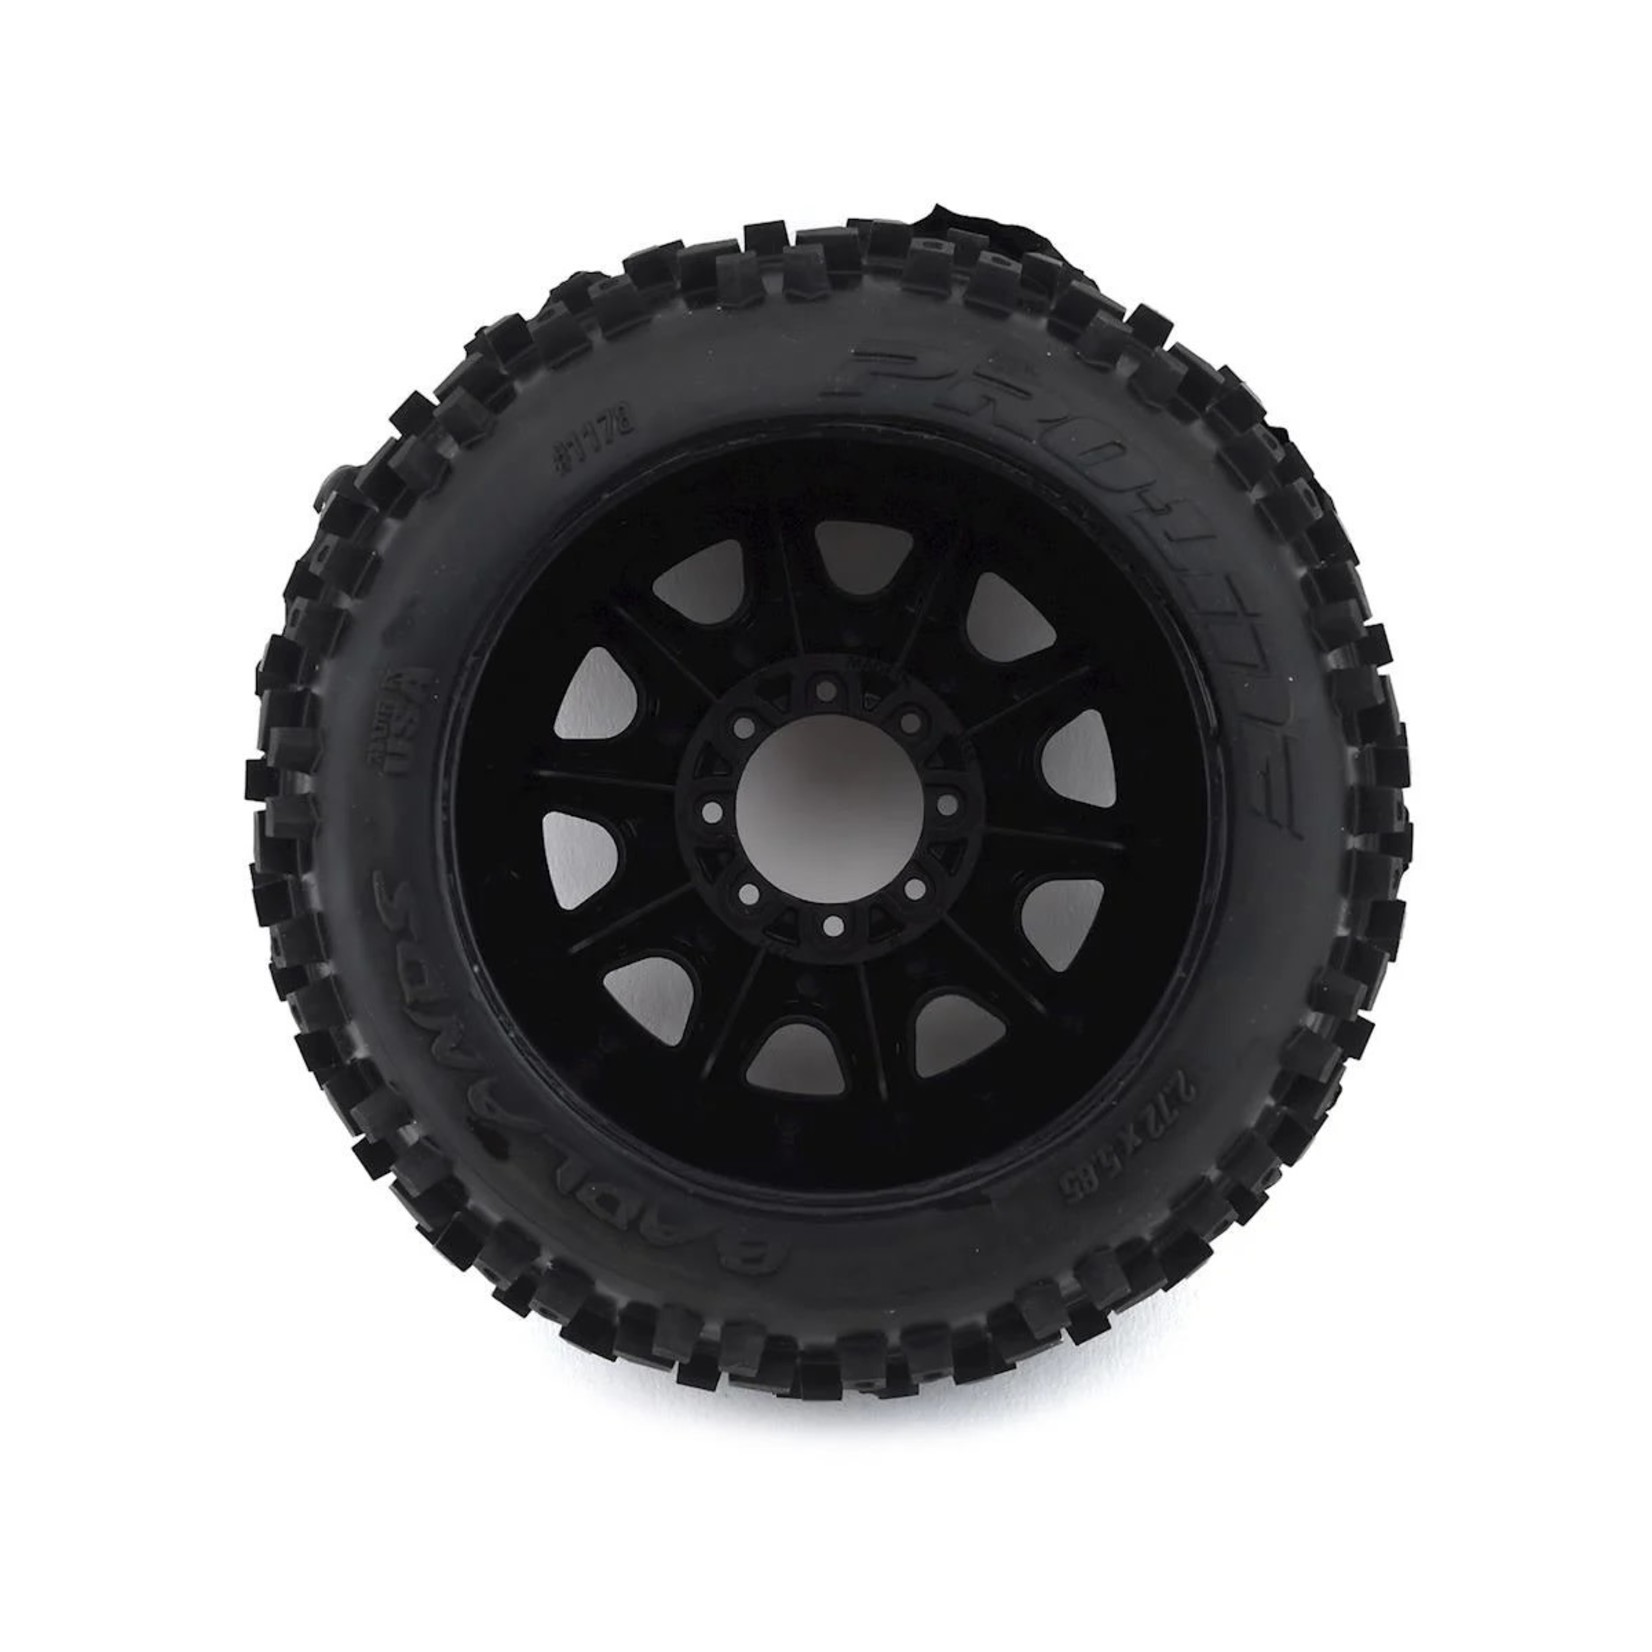 Pro-Line Pro-Line Badlands 3.8" Pre-Mounted Truck Tires (2) (Black) w/Raid Wheels (M2) #1178-10